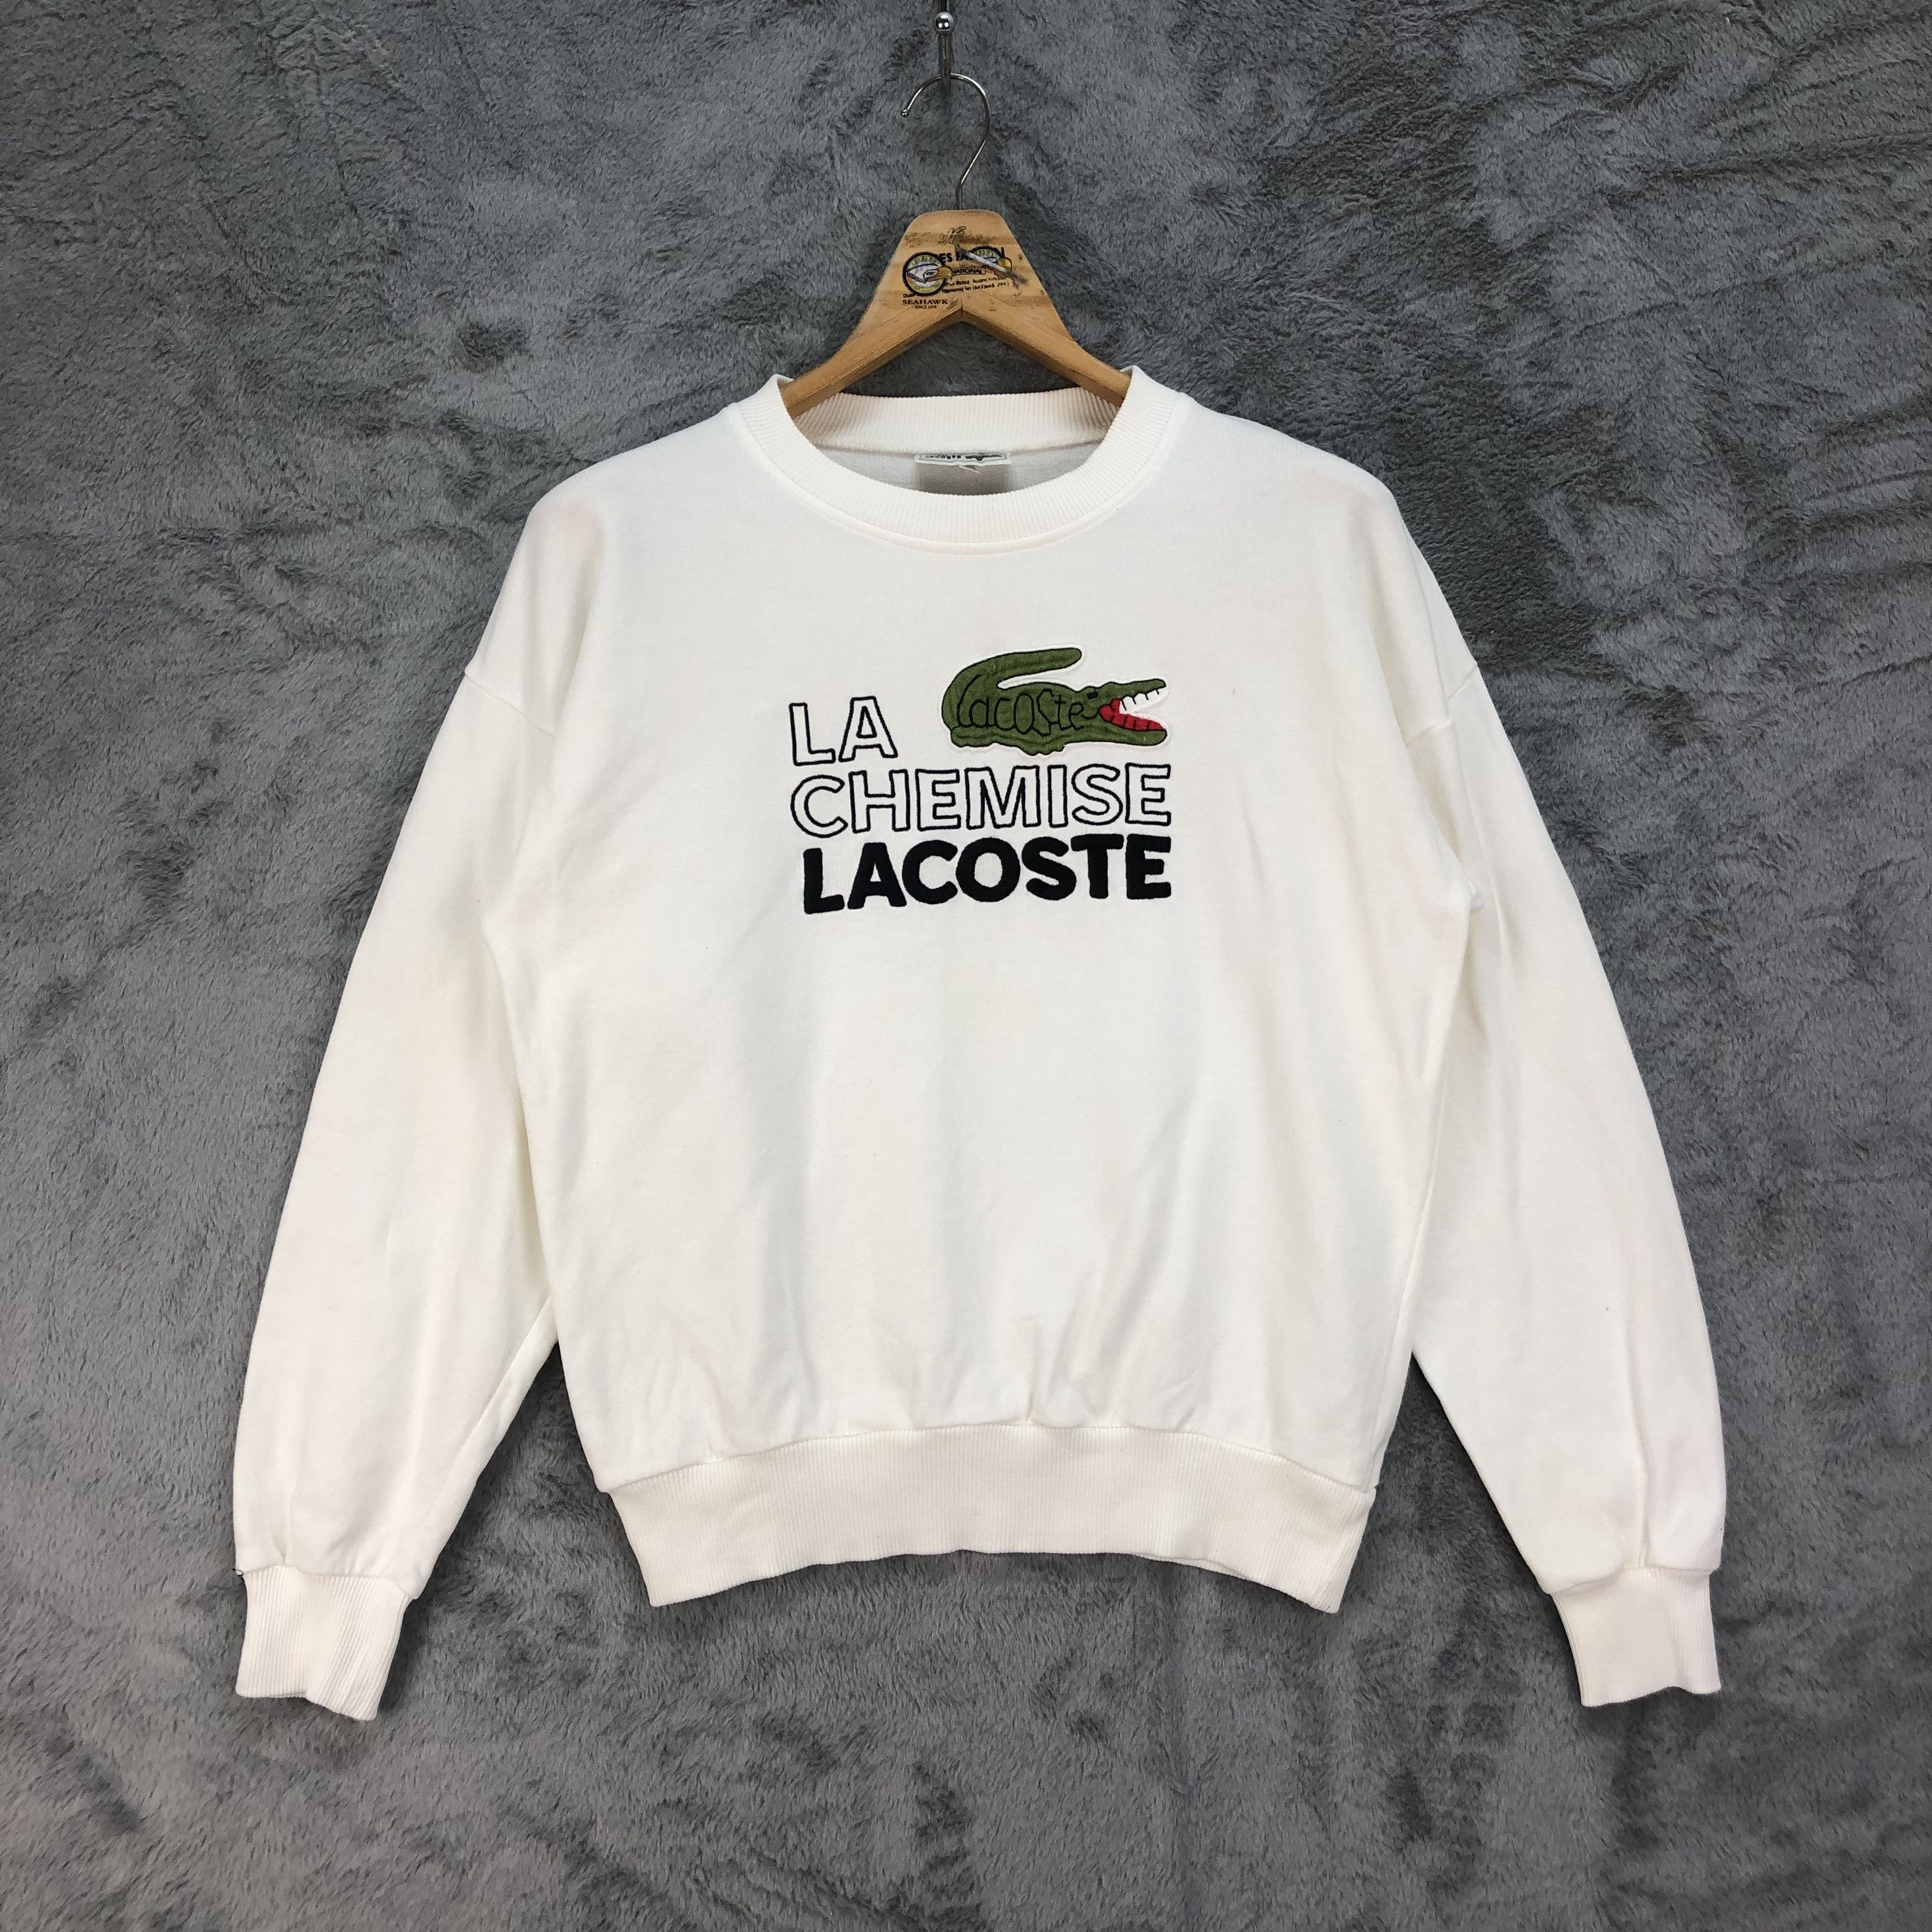 Vintage LA CHEMISE LACOSTE Big Logo Sweatshirts #4693-163 Grailed